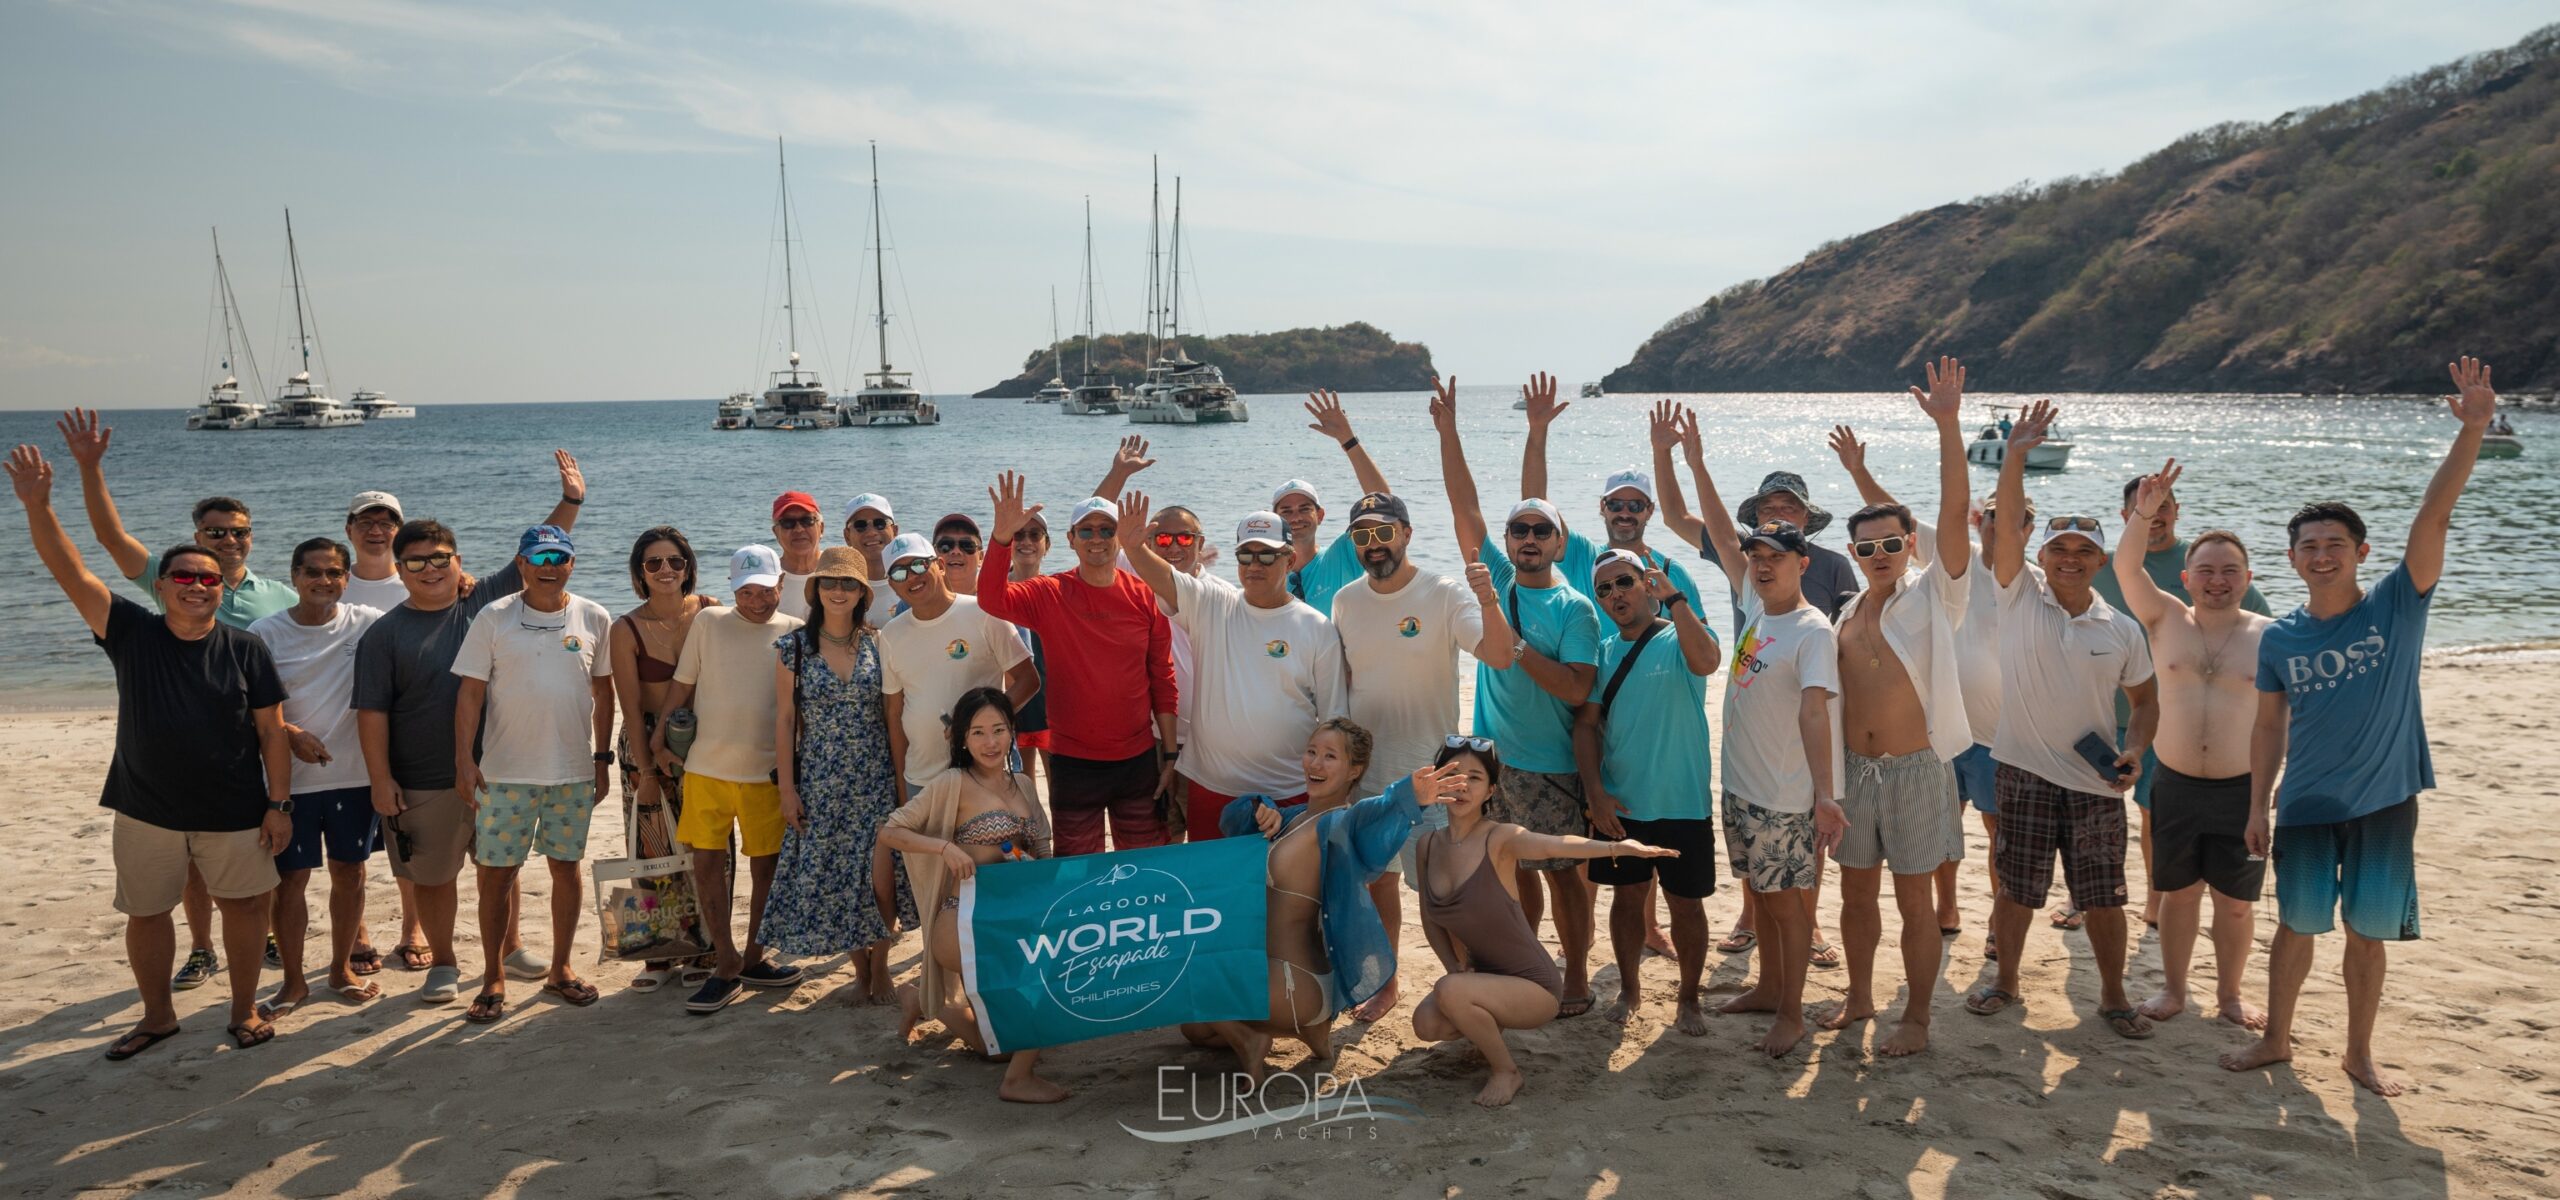 Europa Yachts Joins Global Celebration of Lagoon Catamaran’s 40th Anniversary with Lagoon World Escapade Philippines